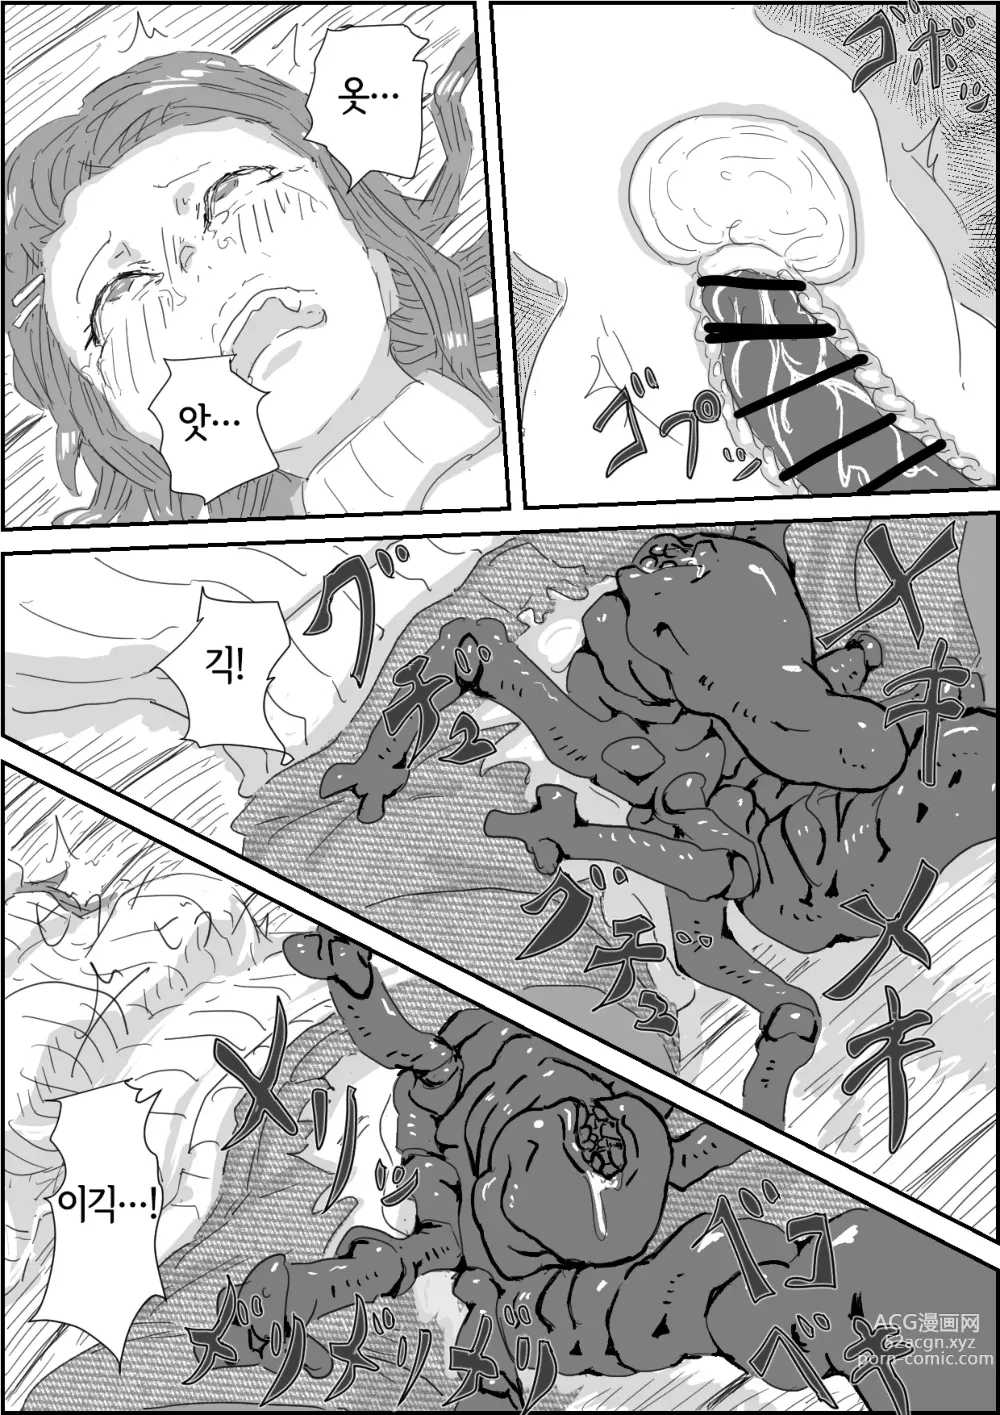 Page 12 of doujinshi 기생당해서 H한 에일리언이 되어버린 아가씨 이야기